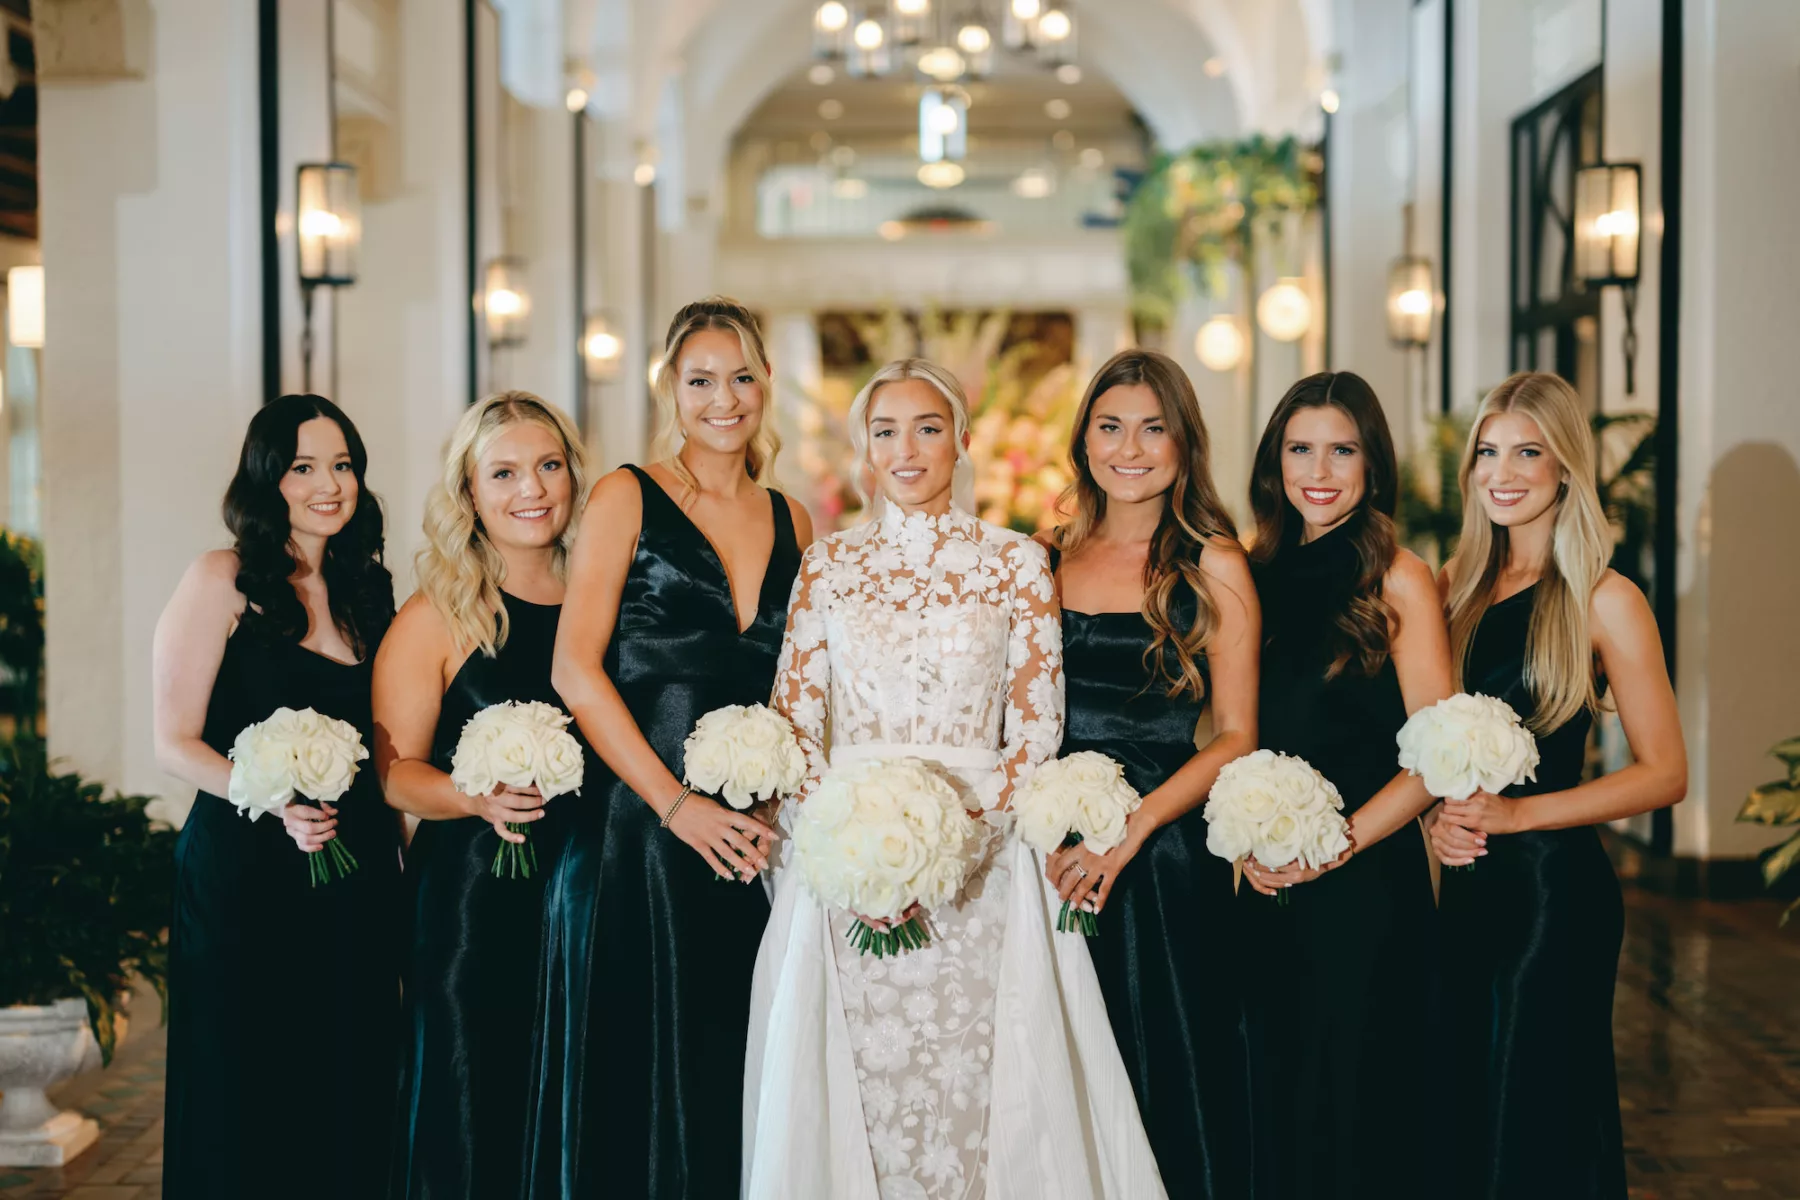 Mismatched Black Bridesmaid Dress Ideas | White Rose Wedding Bouquet Inspiration